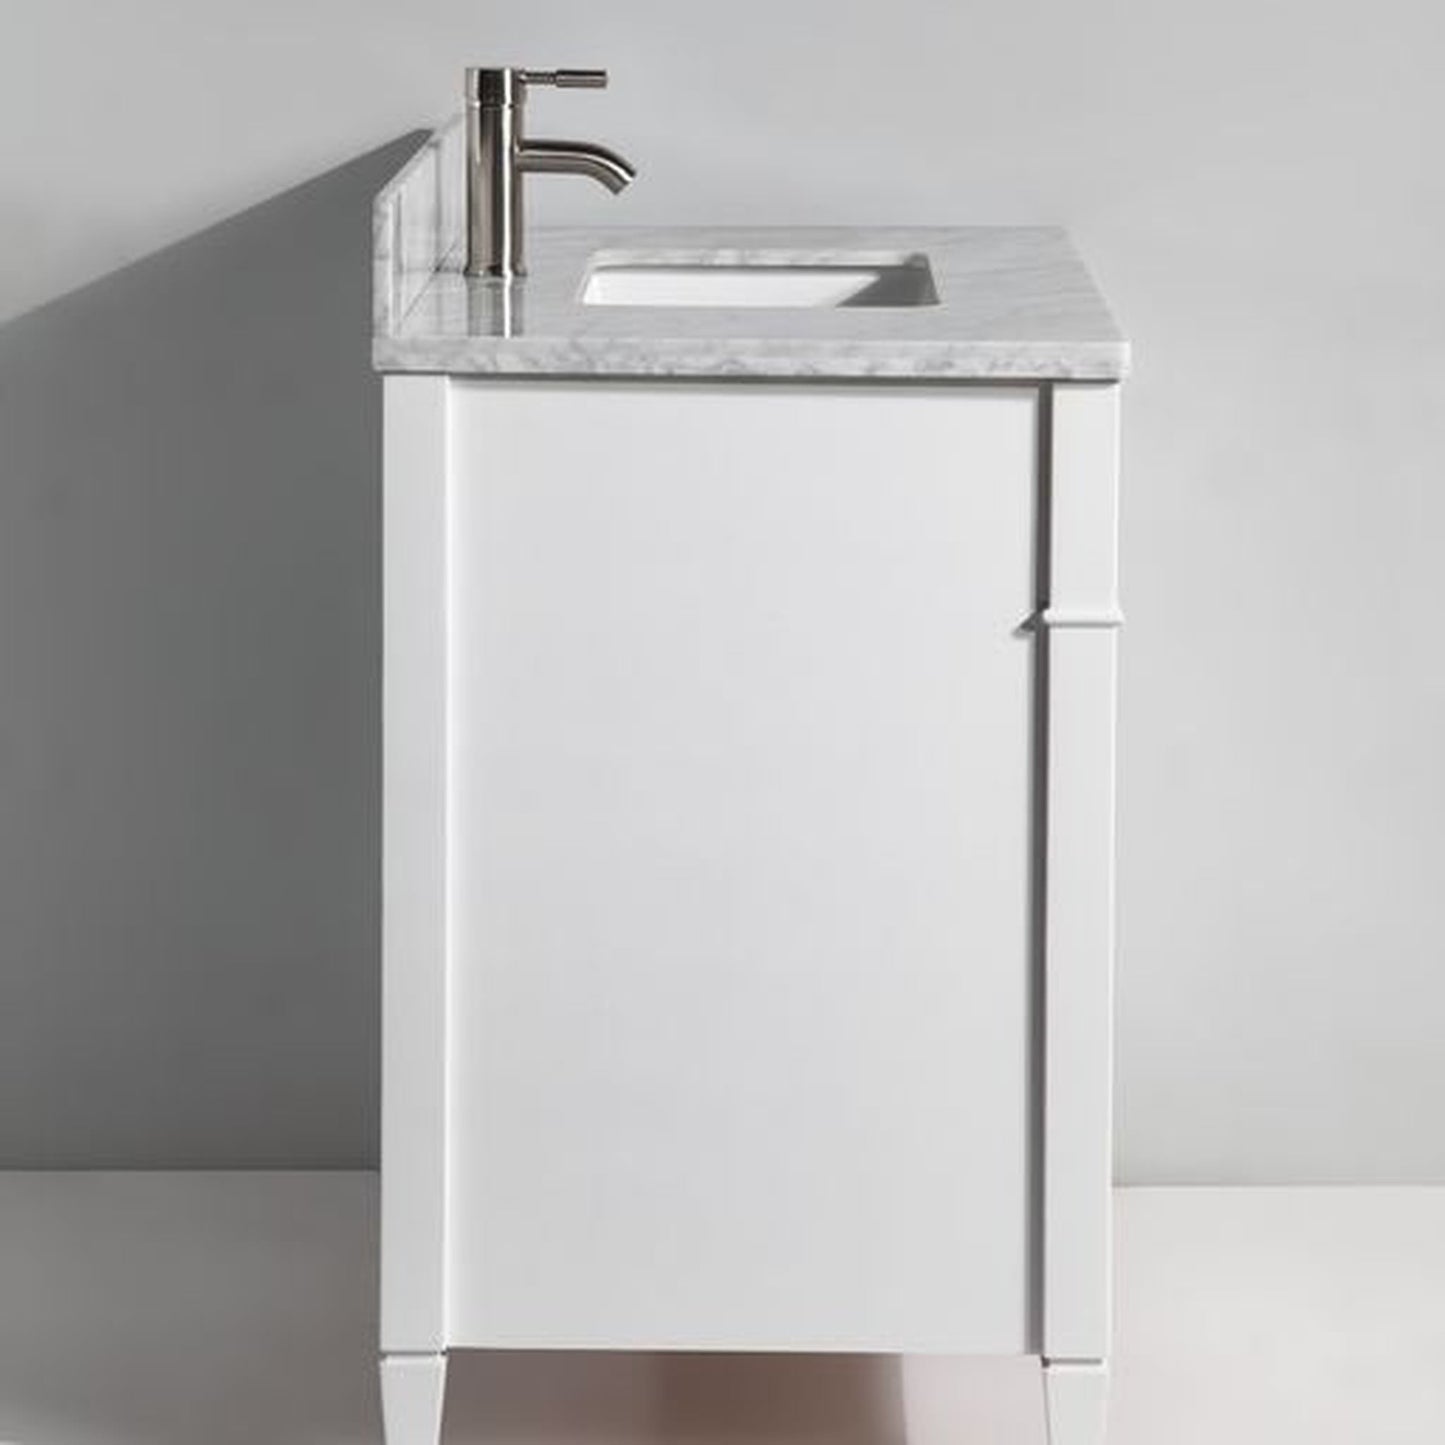 Vanity Art Savona 36" Single White Freestanding Modern Bathroom Vanity Set With Carrara Marble Top, Undermount Ceramic Sink, 3 Dovetail Drawer Cabinet, Backsplash and Mirror